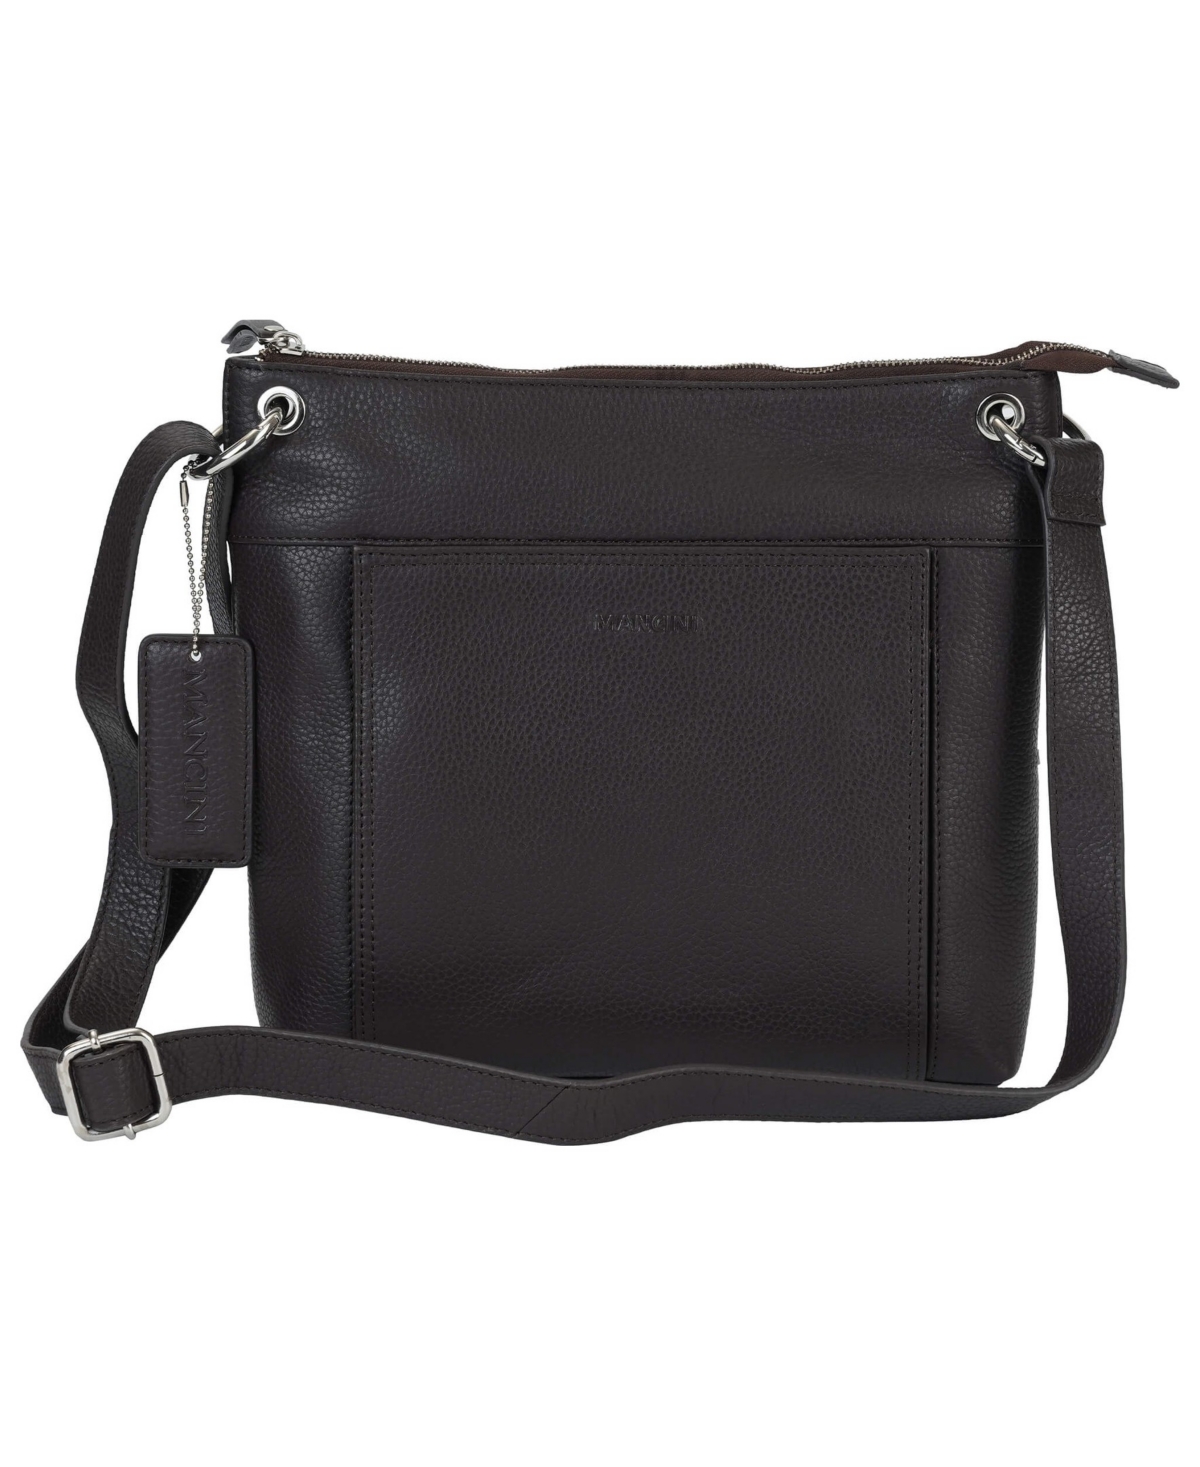 Pebble Trish Leather Crossbody Handbag with Organizer - Brown